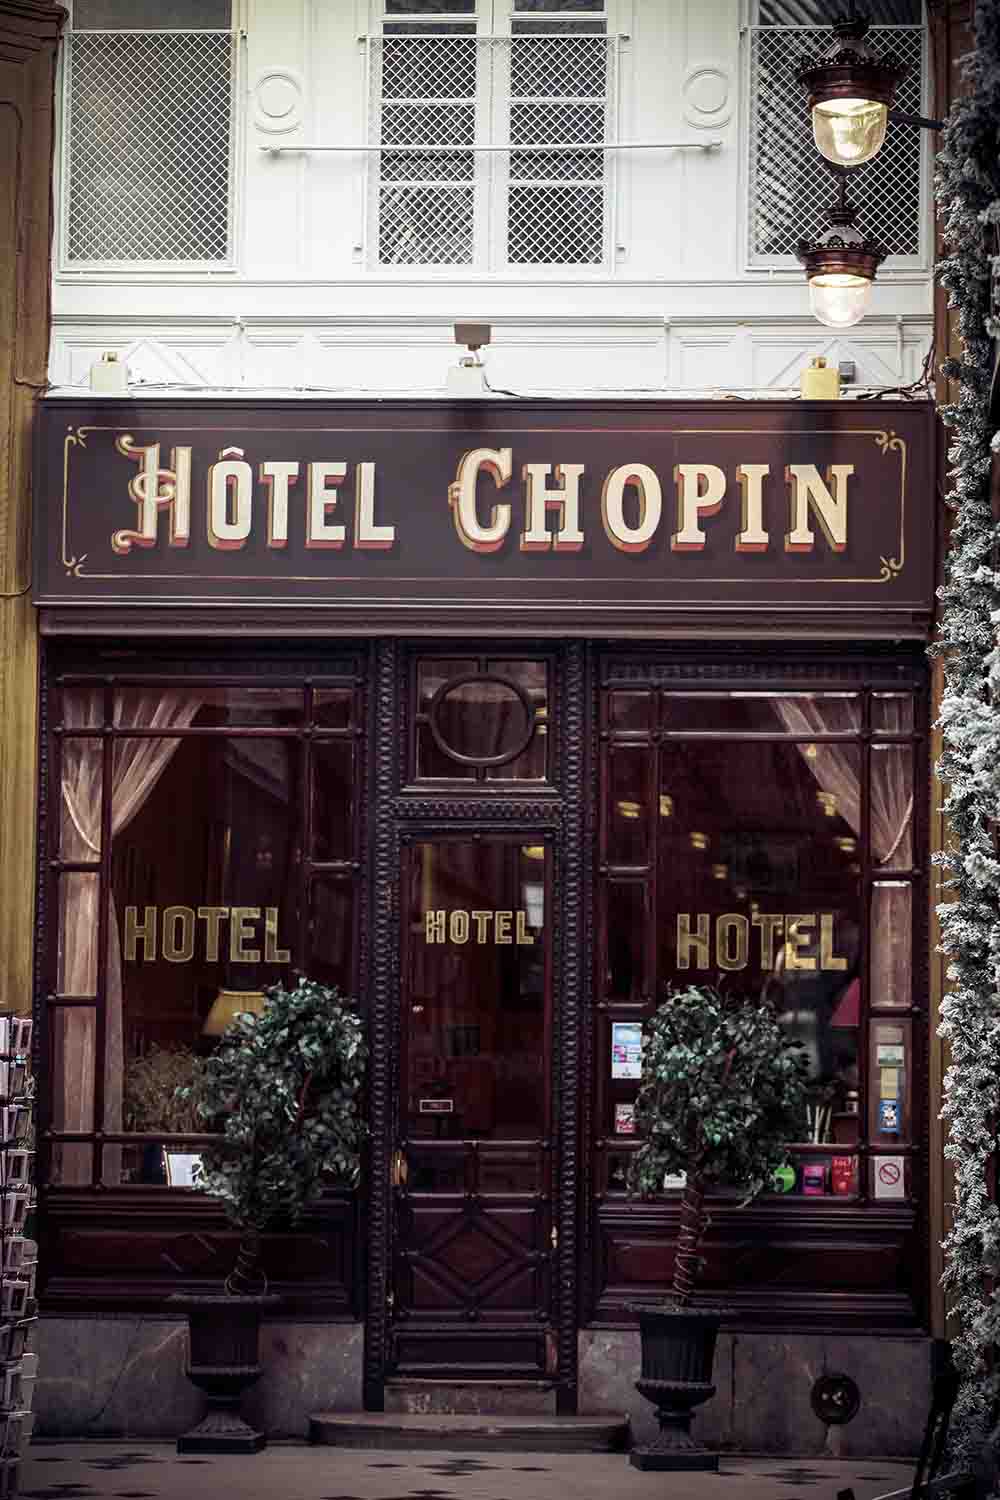 Hotel Chopin : The oldest hotel in Paris